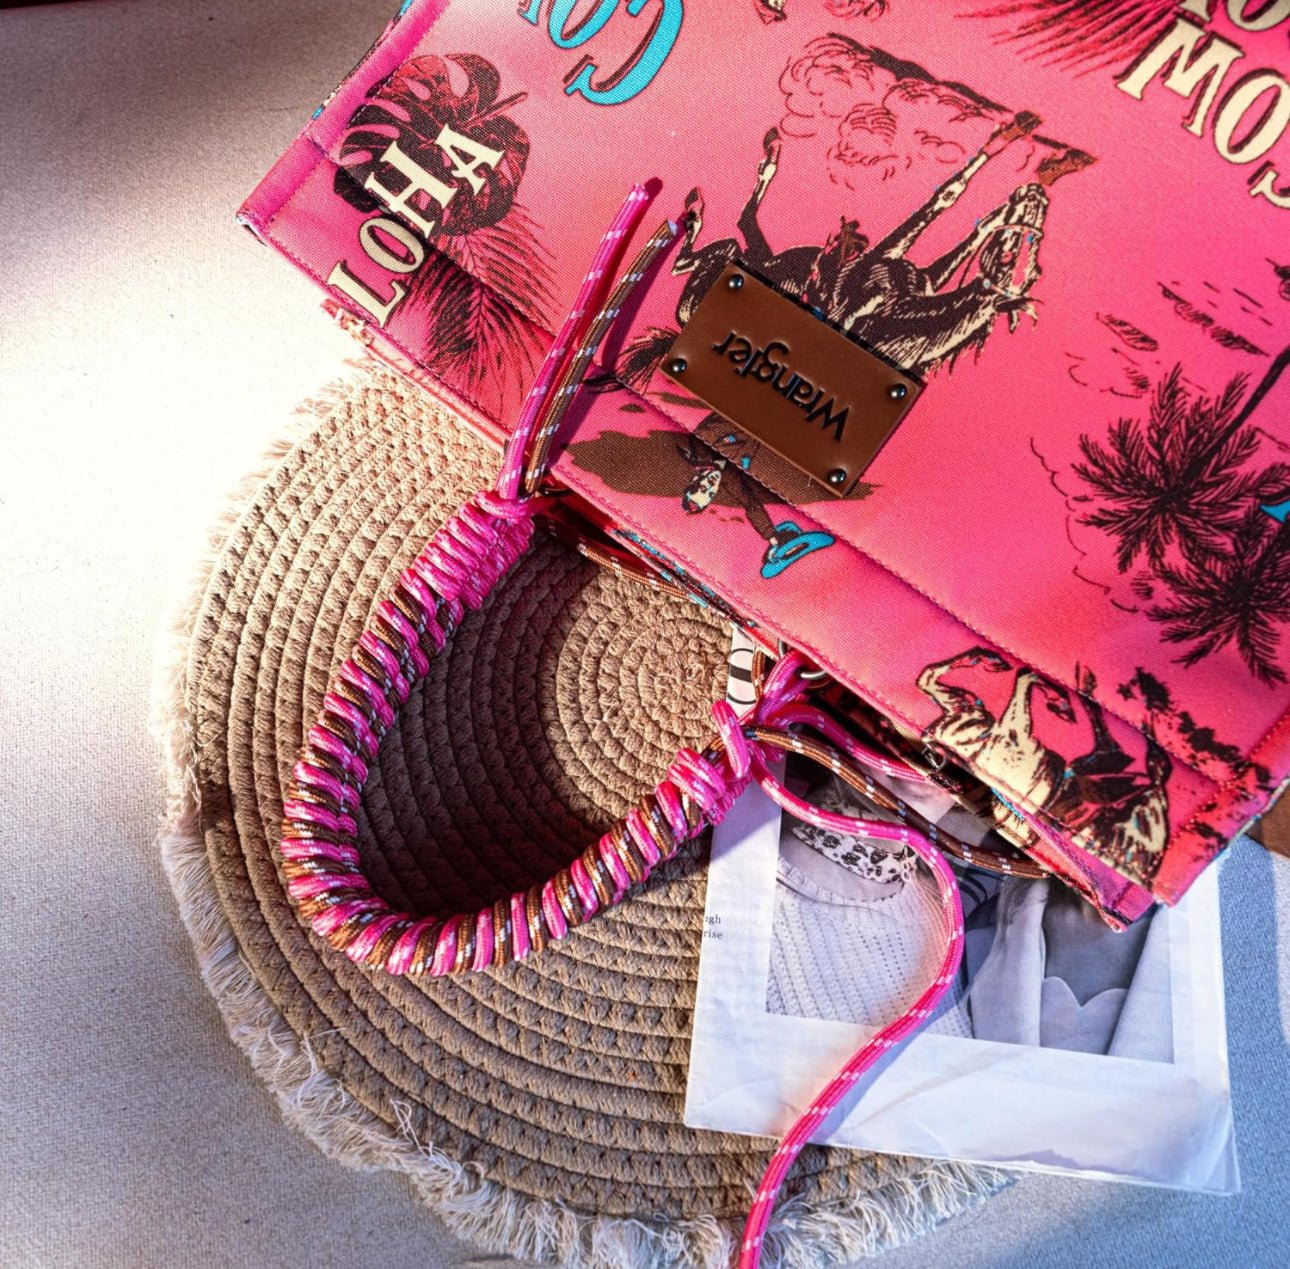 Wrangler® Aloha Cowboy Tote - Hot Pink